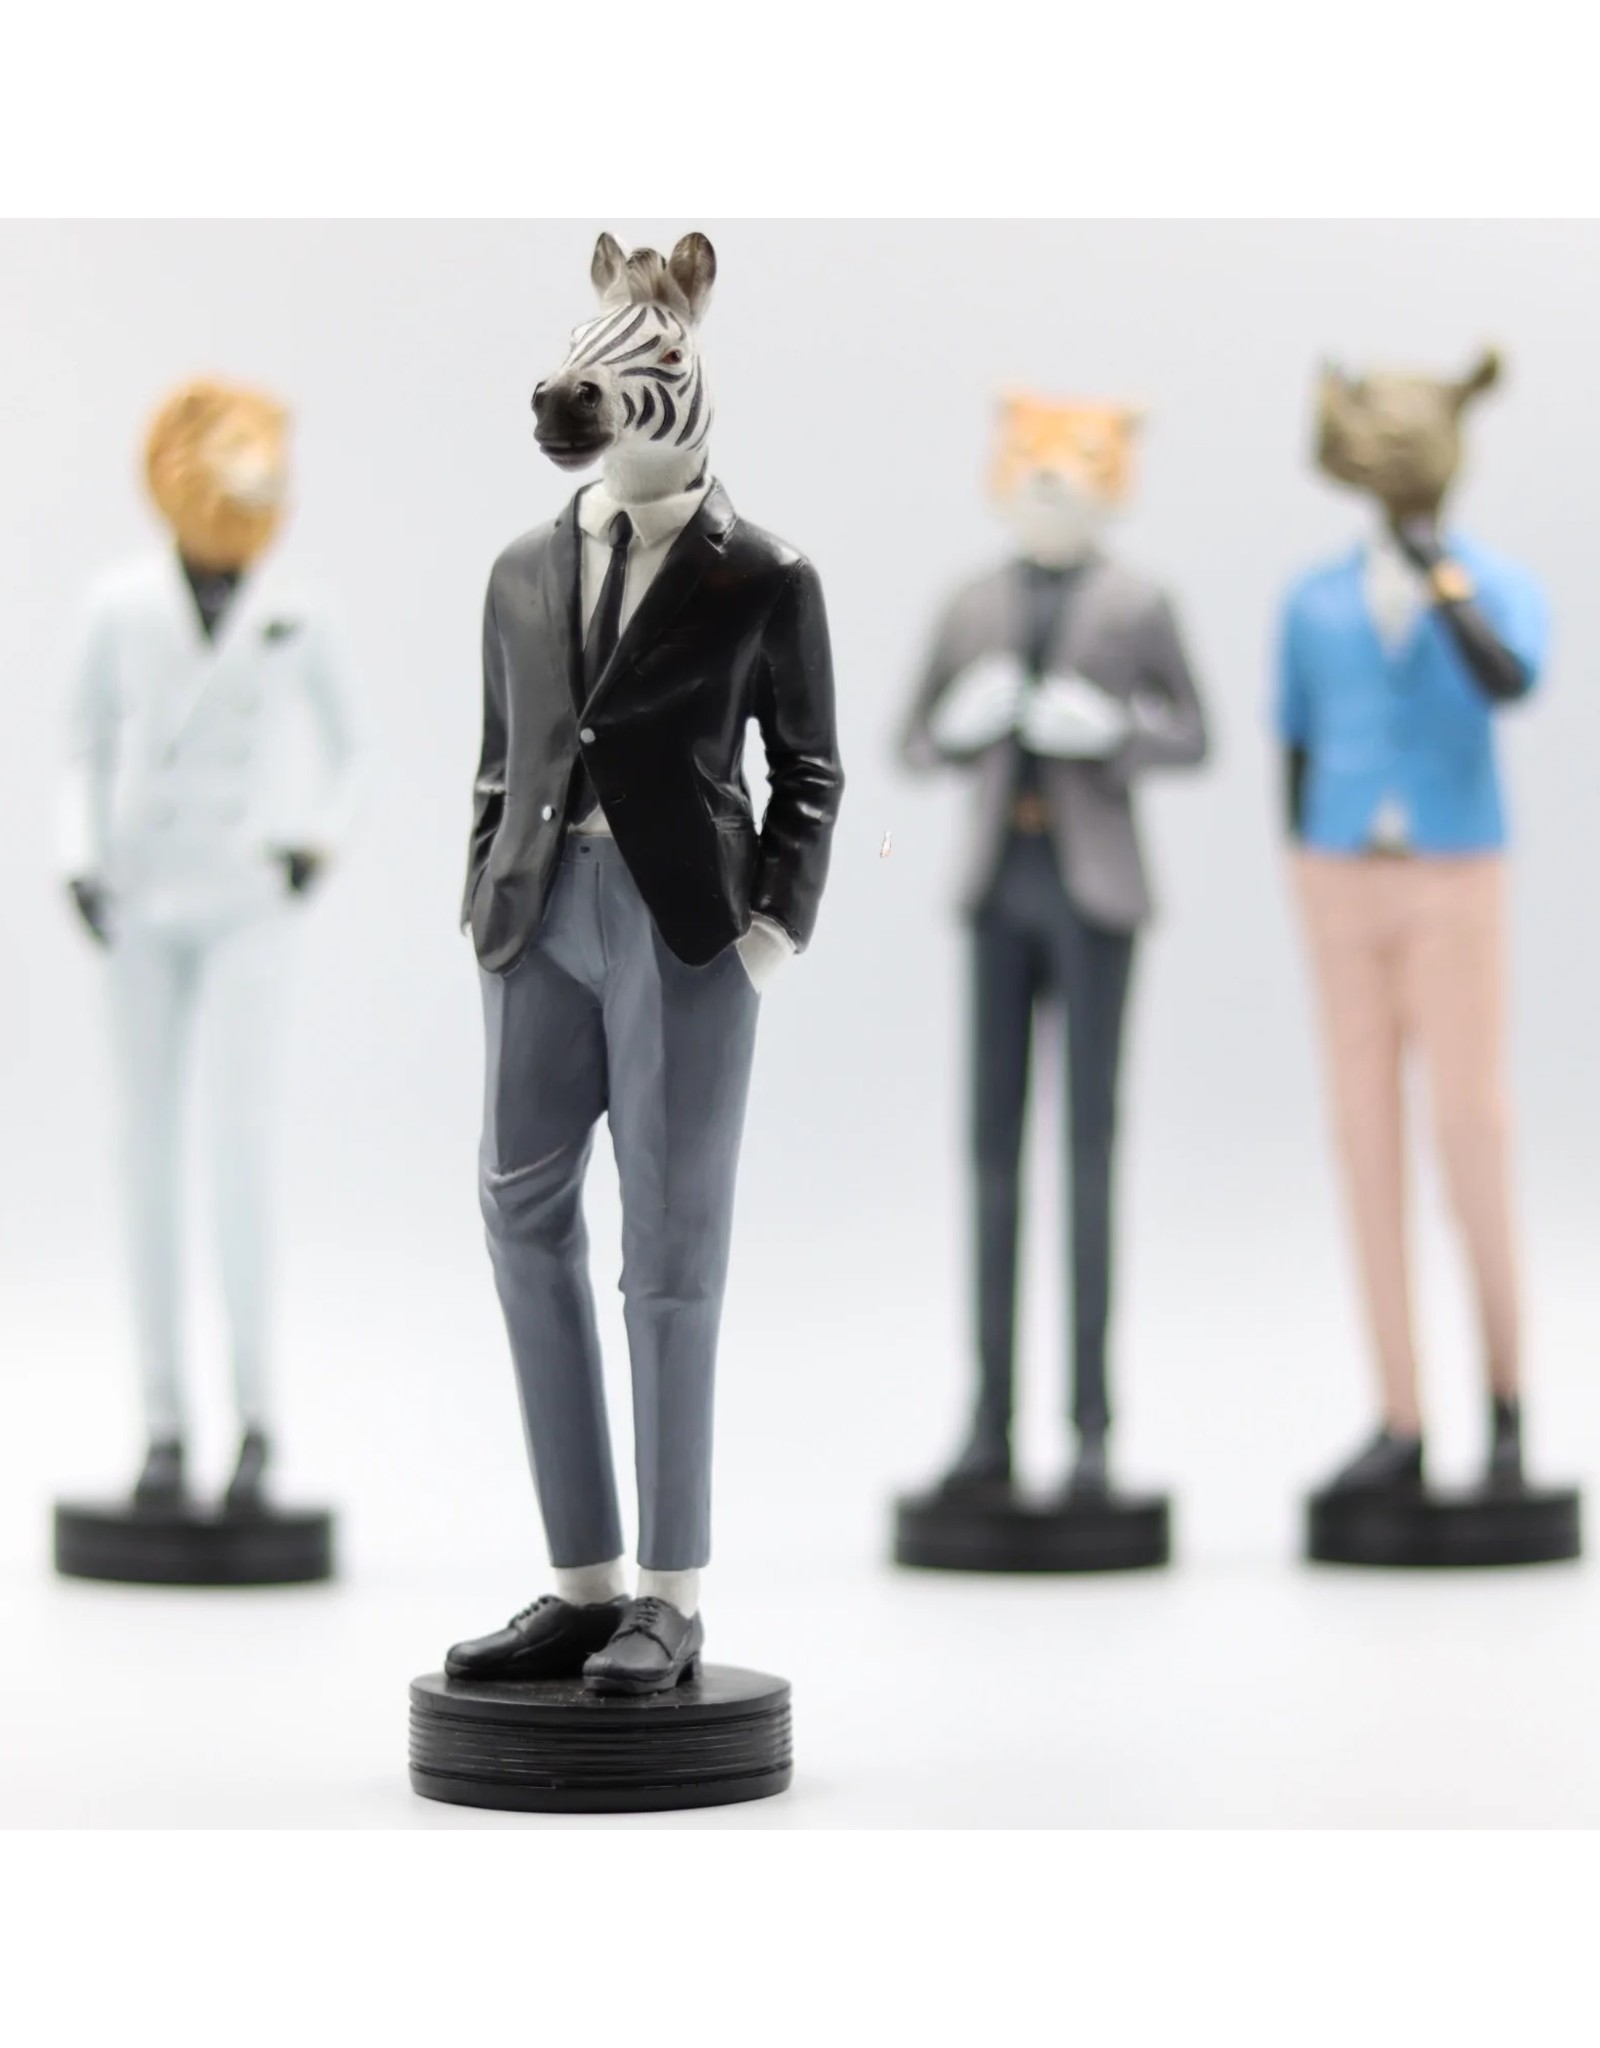 Bentley&Bo Giftware & Lifestyle - Charles the Zebra figurine 25cm